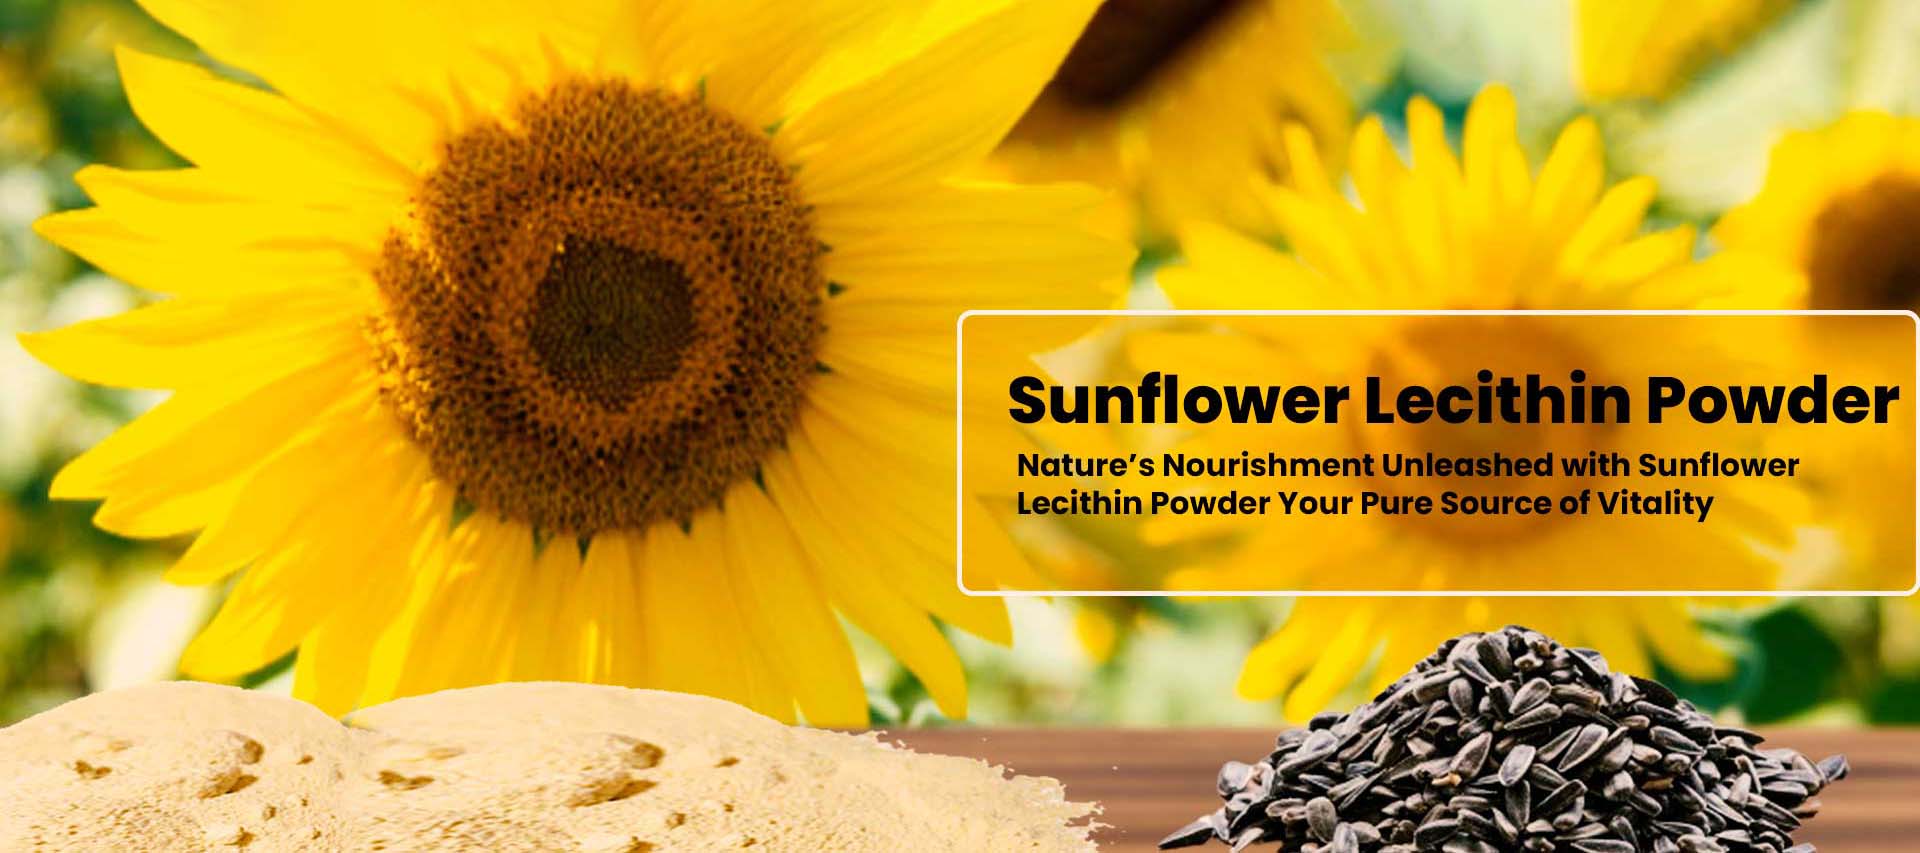 Sunflower Lecthin Powder in Amravati